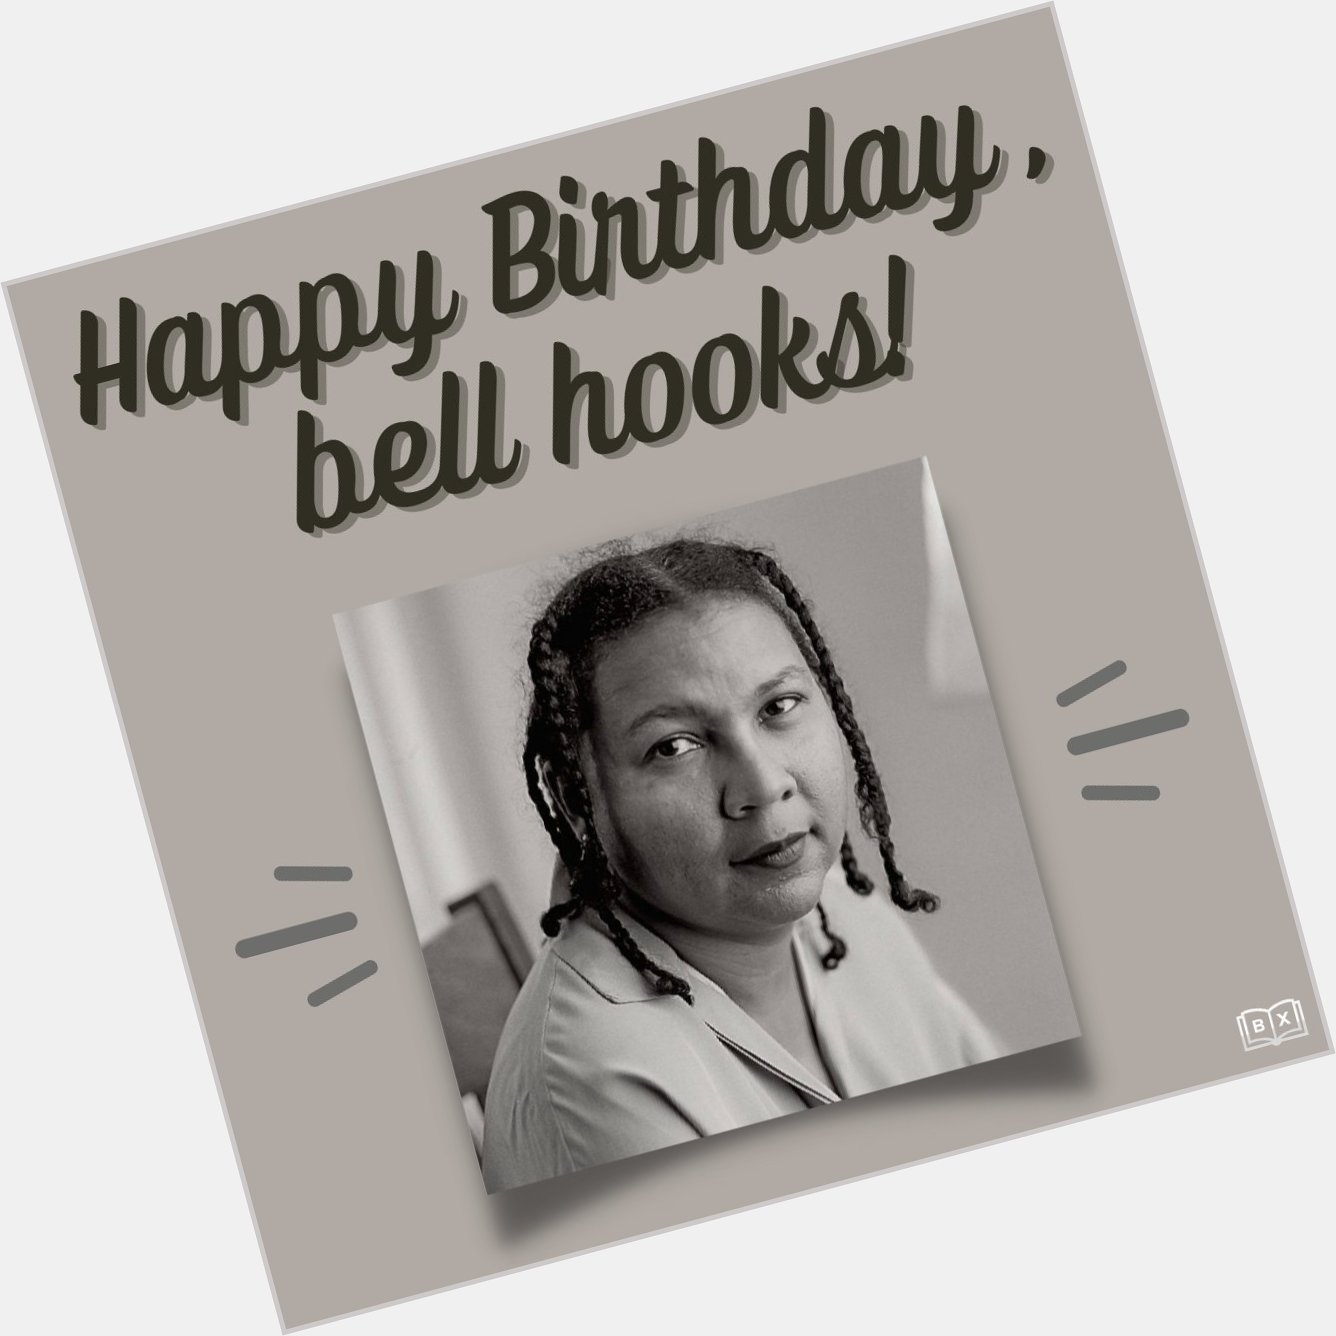 Happy birthday, bell hooks! 